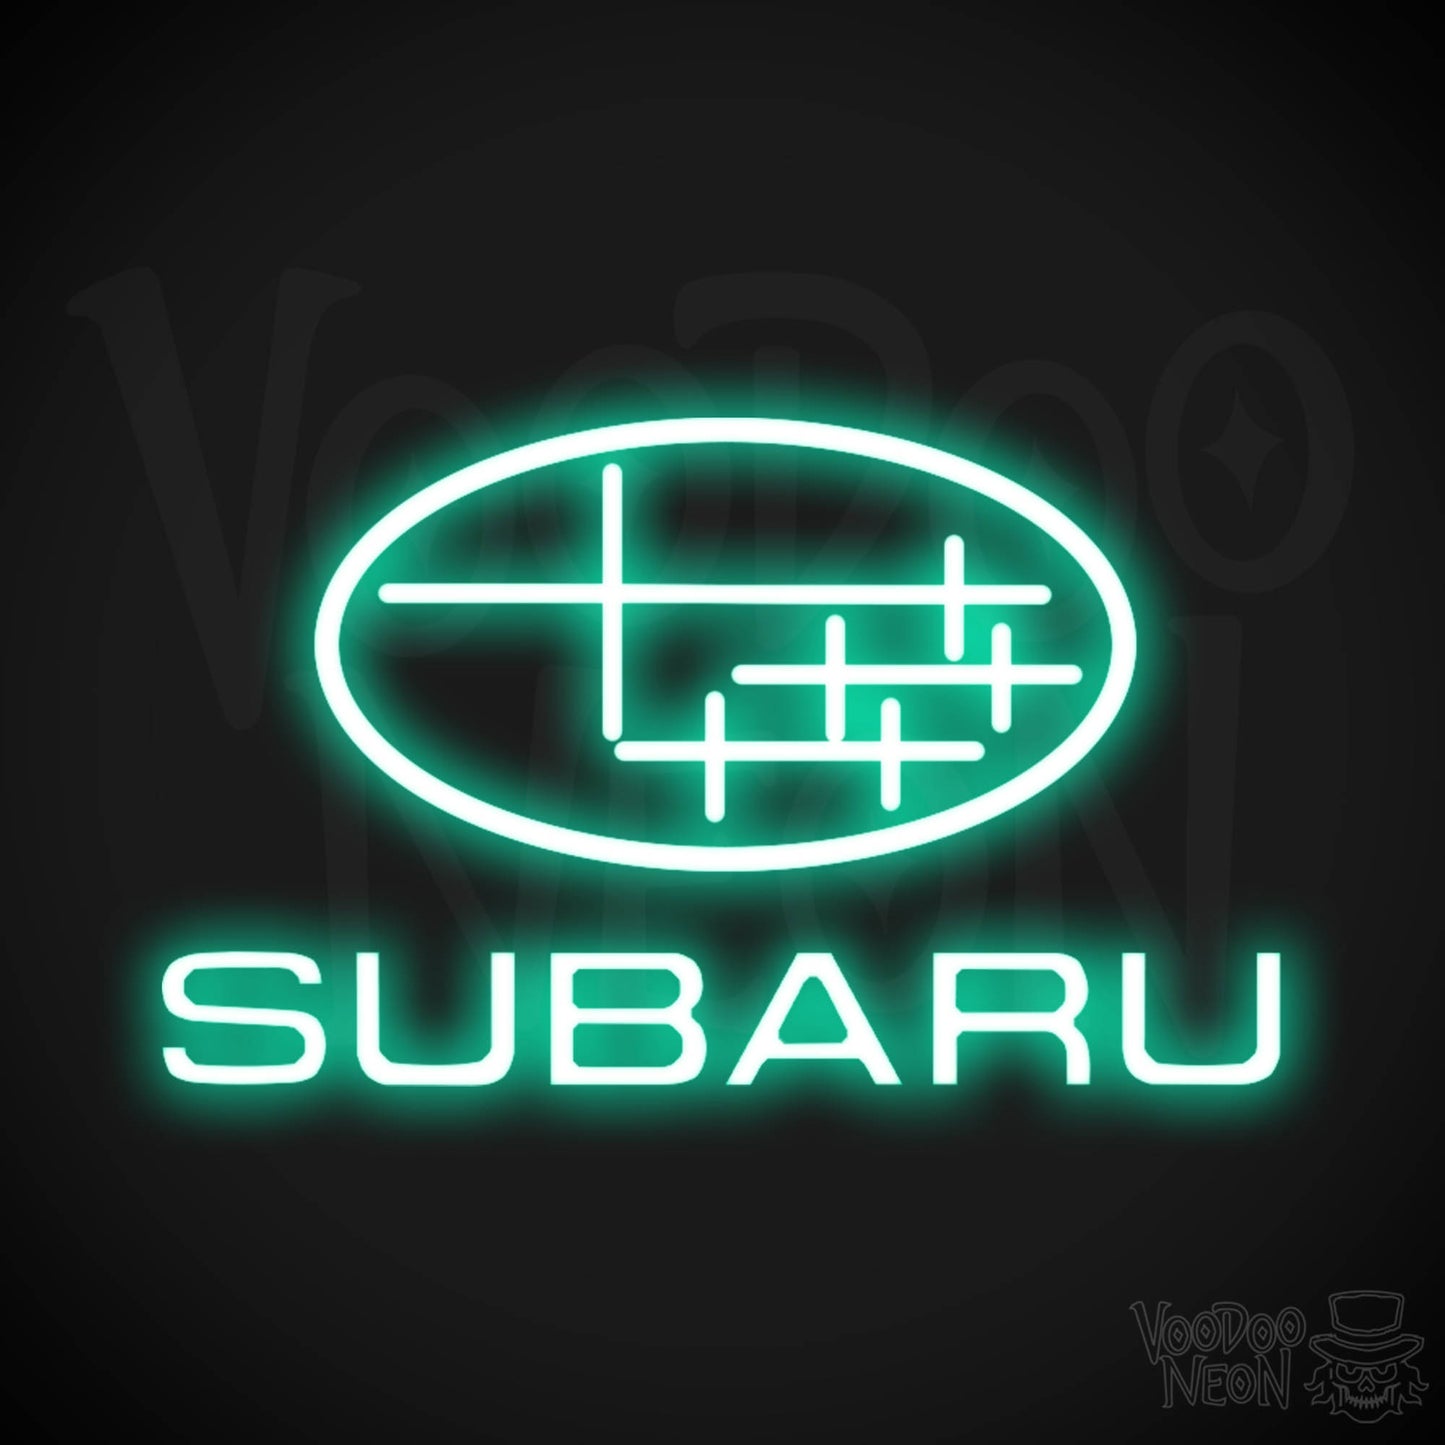 Subaru Neon Sign - Subaru Sign - Subaru Decor - Wall Art - Color Light Green